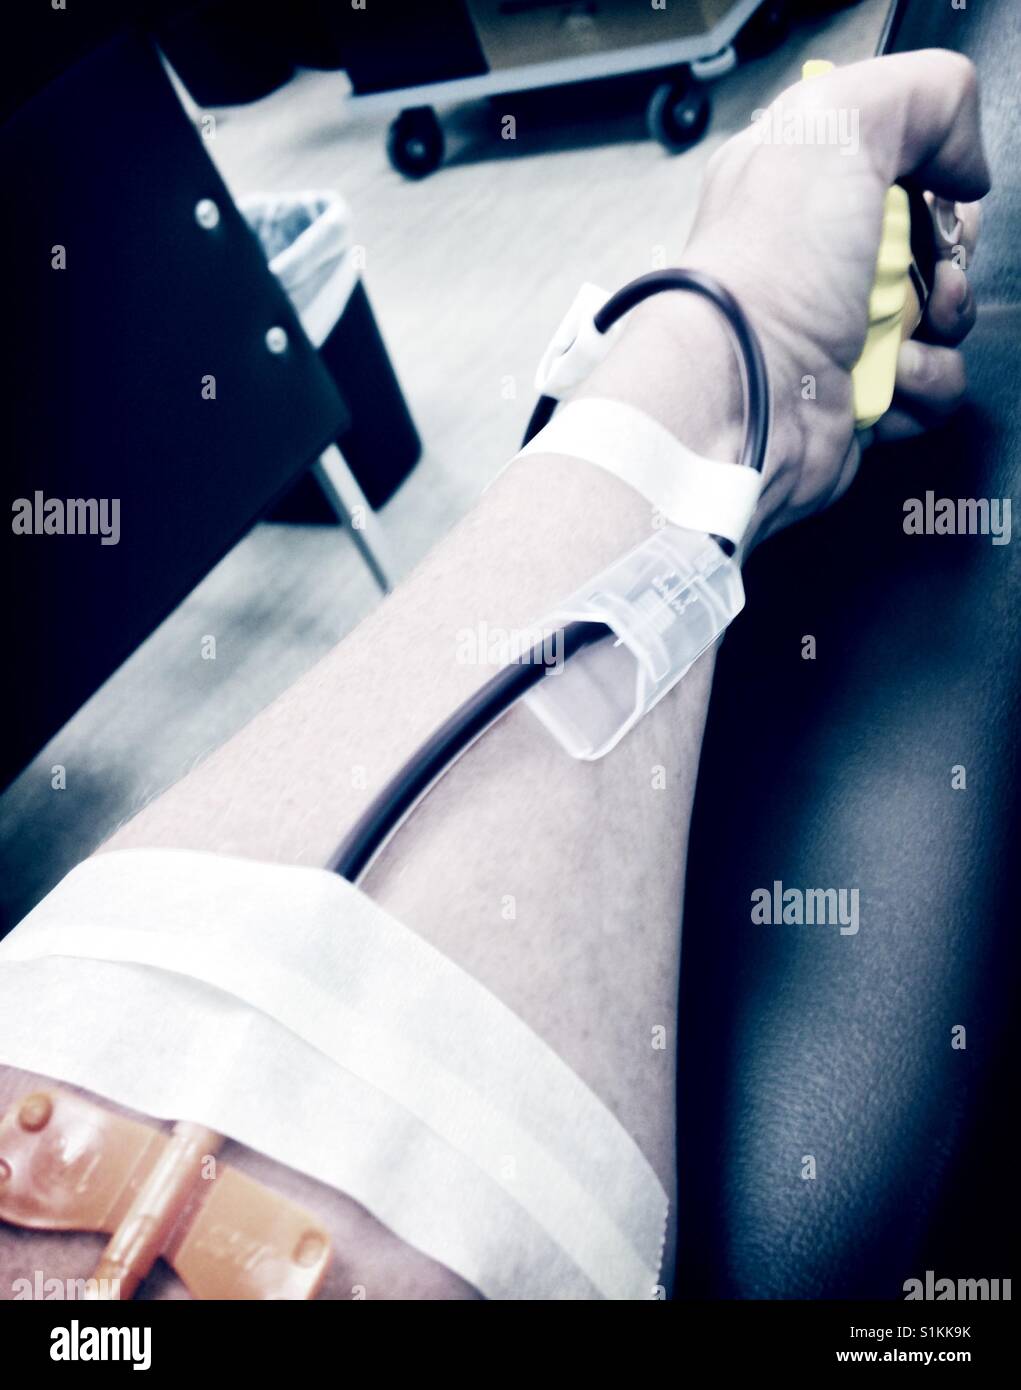 Blood letting- donating plasma in North Carolina Stock Photo